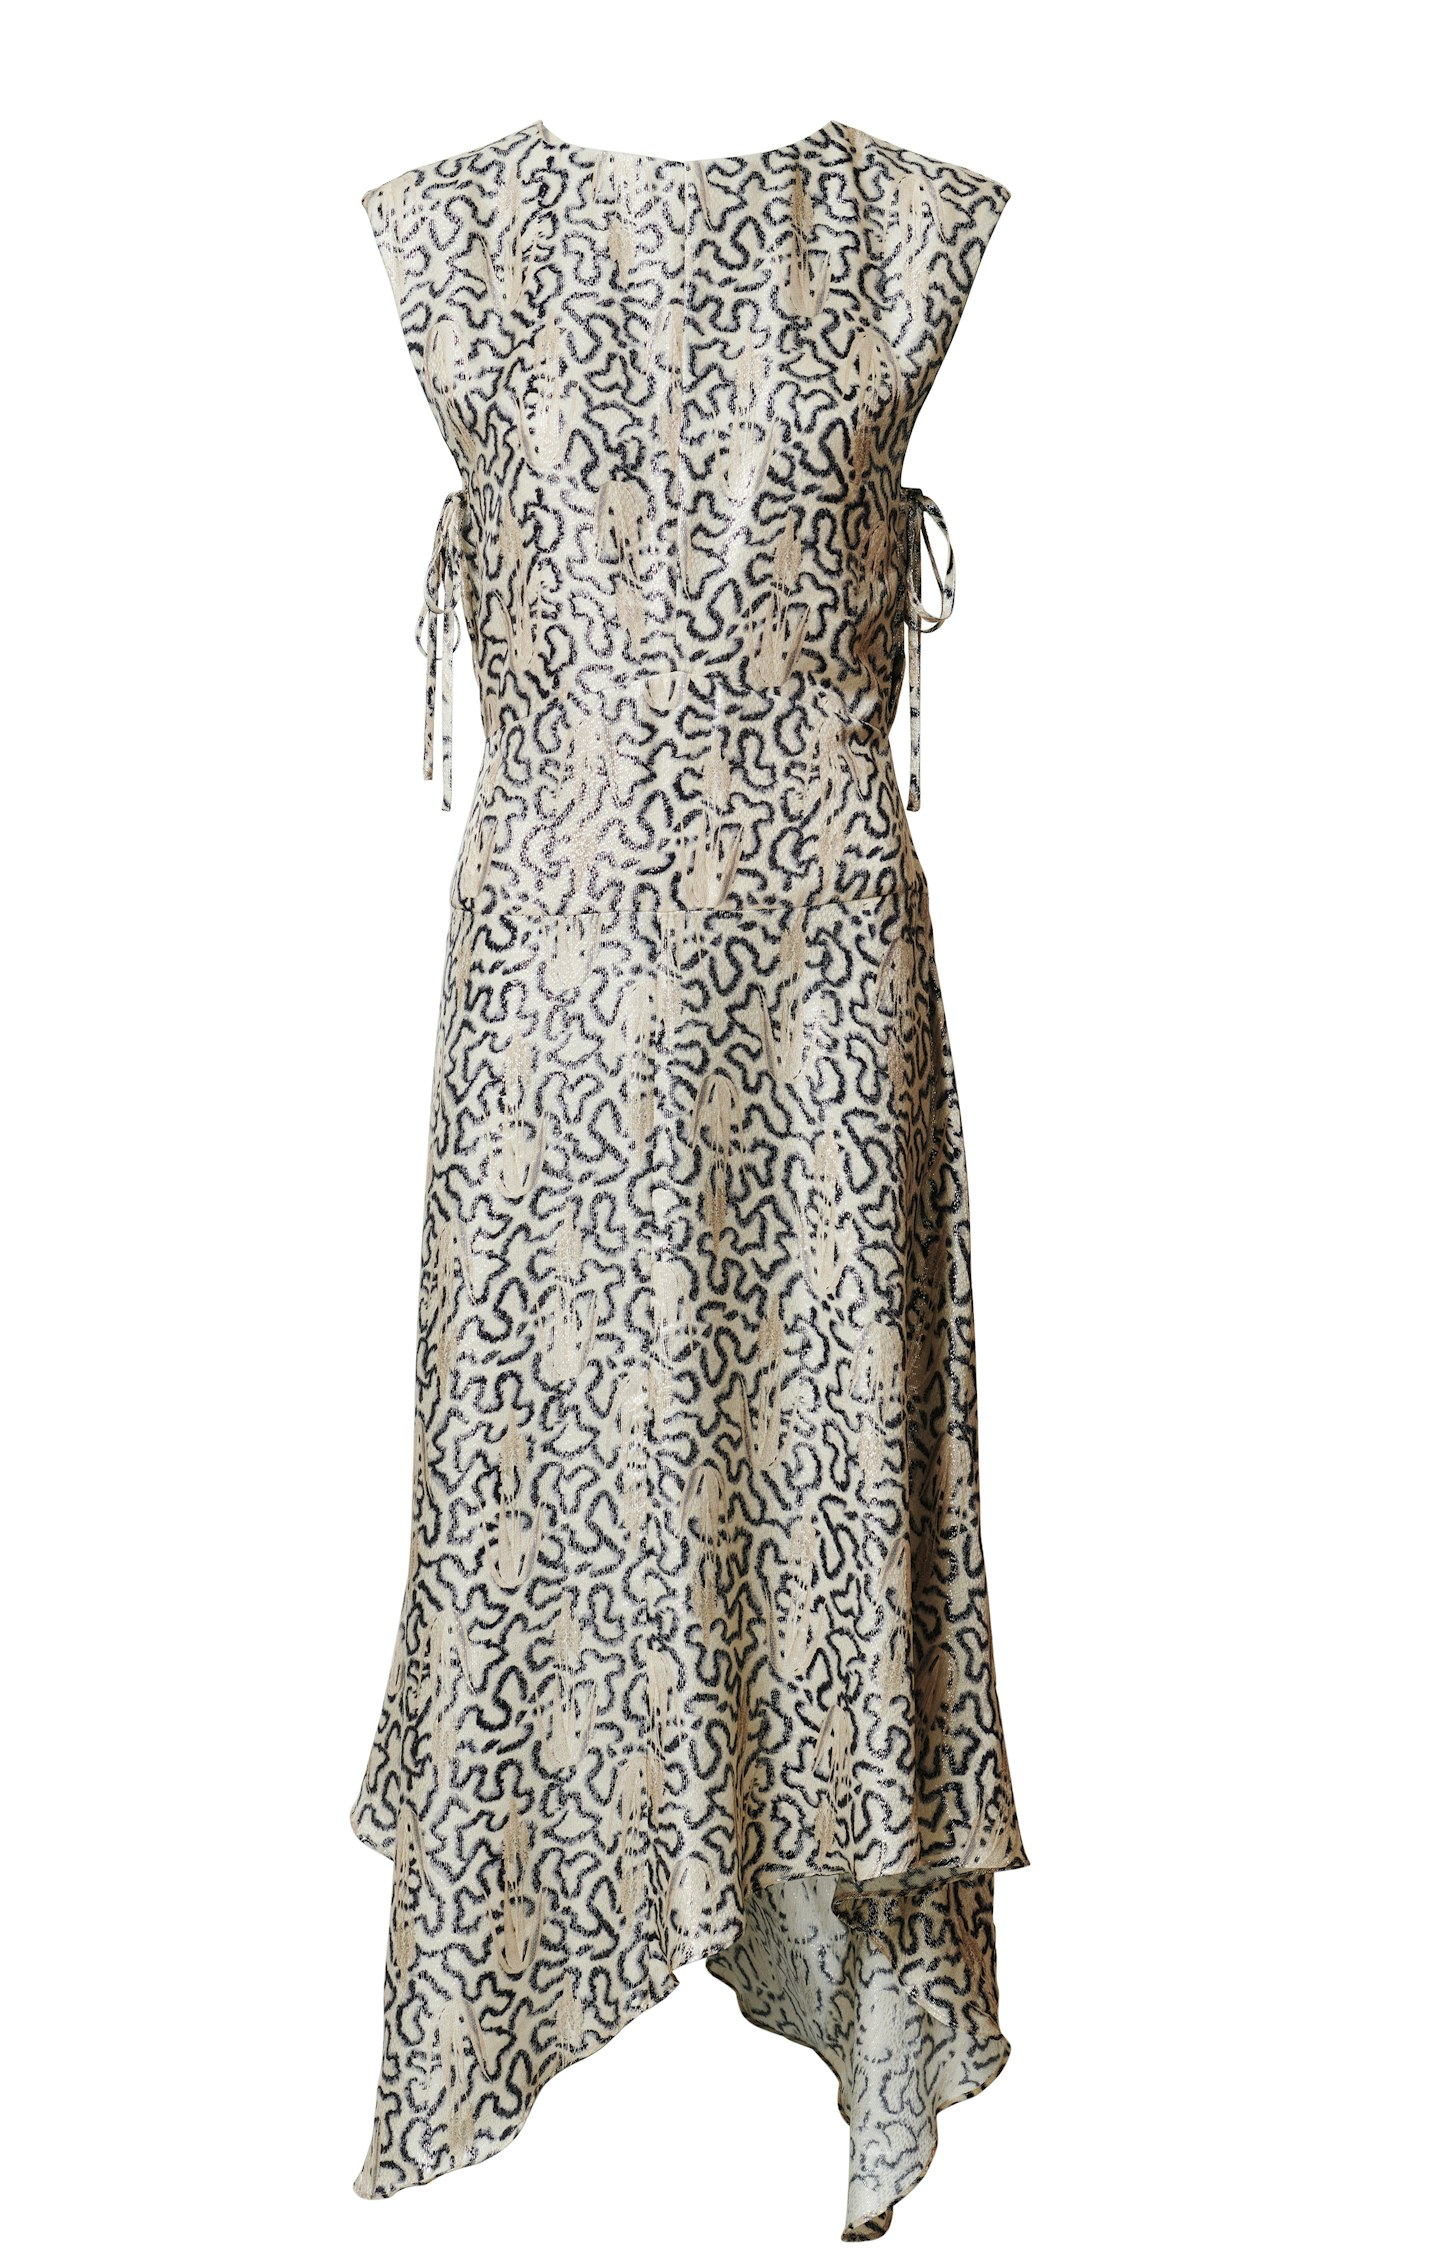 Patterned Silk-Blend Dress, £79.99